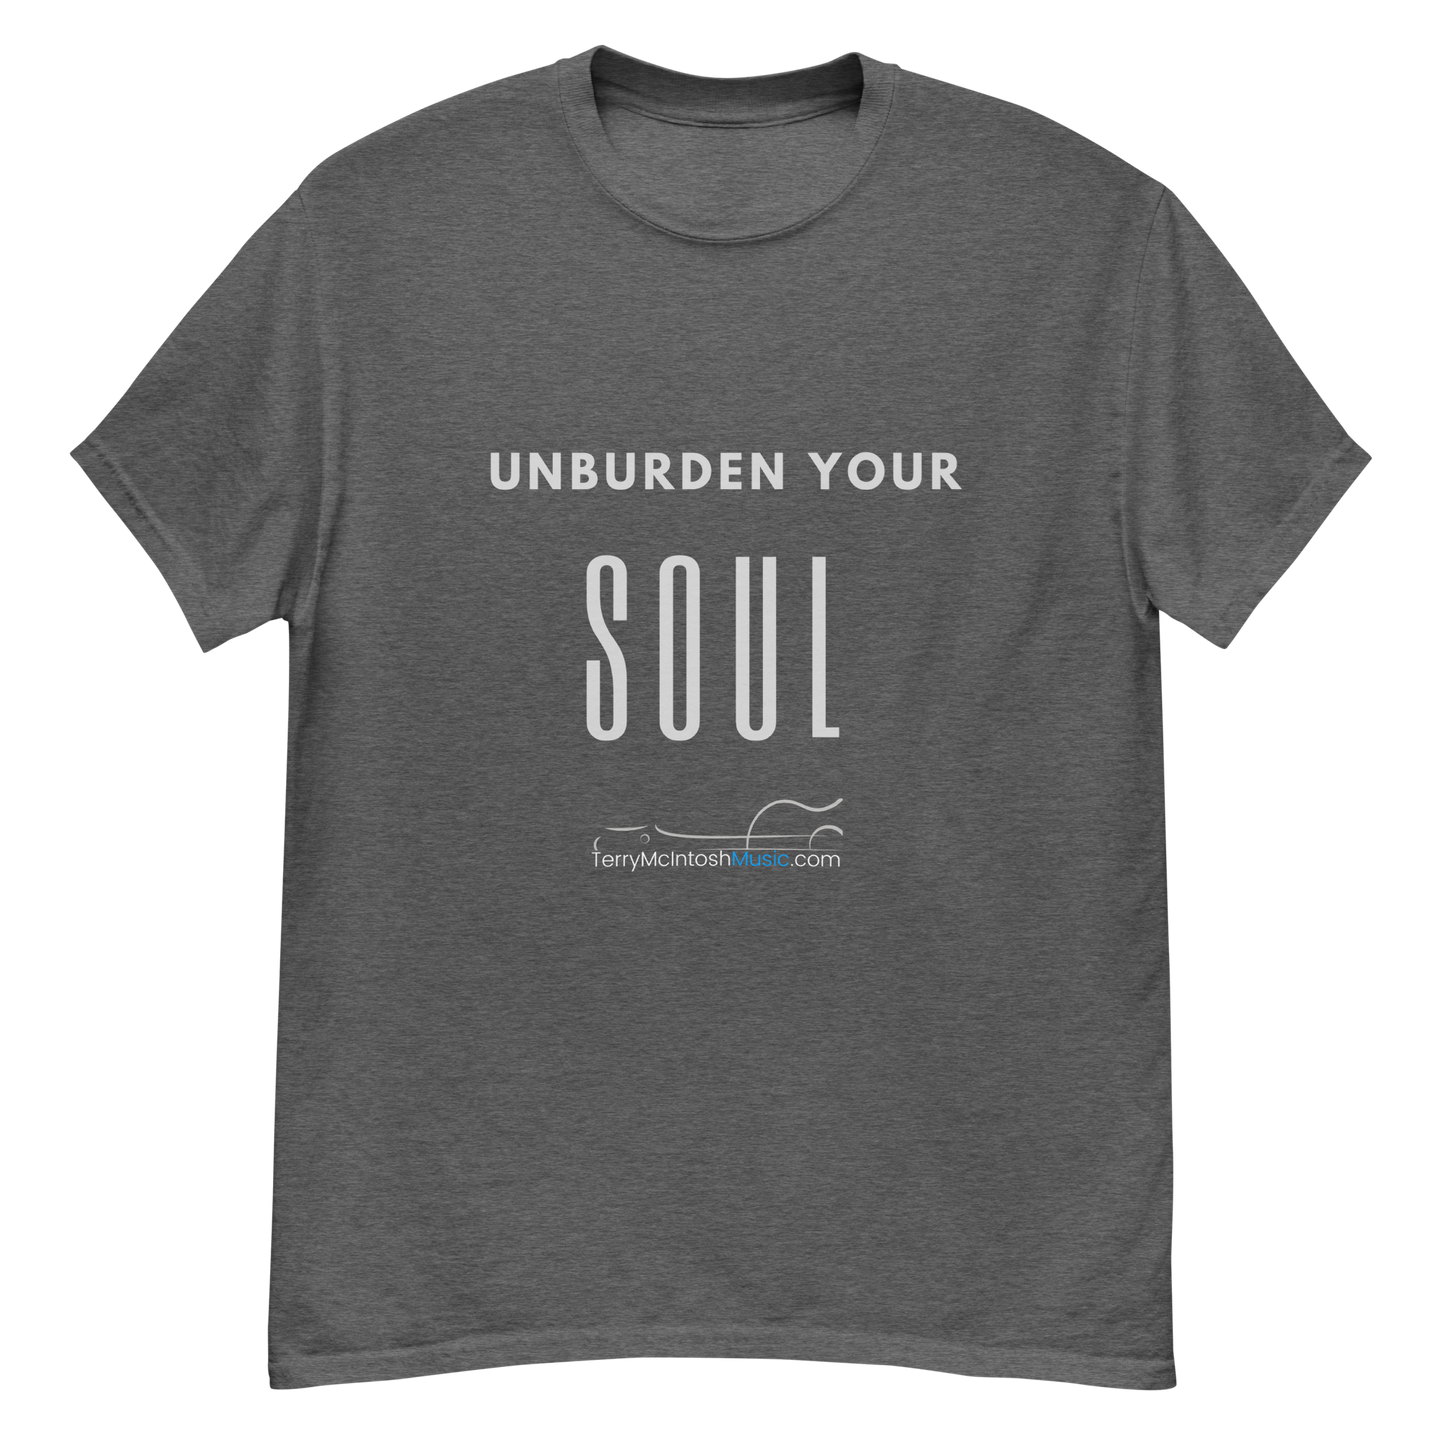 Unburden Your Soul - Men's classic tee